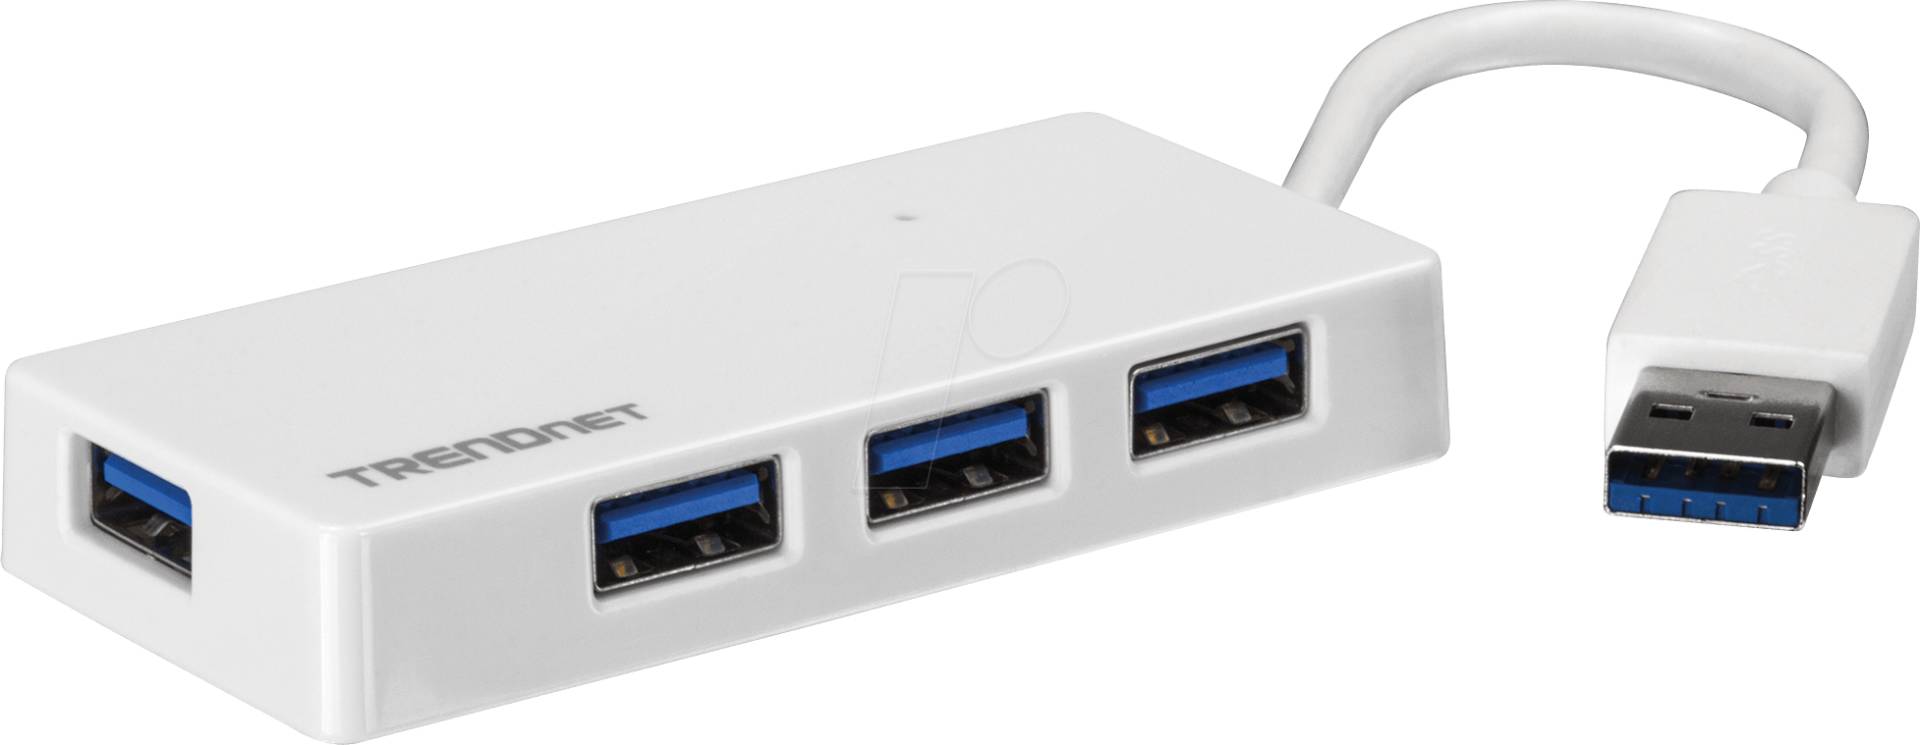 TRN TU3-H4E - 4-Port USB 3.0 Mini Hub von Trendnet